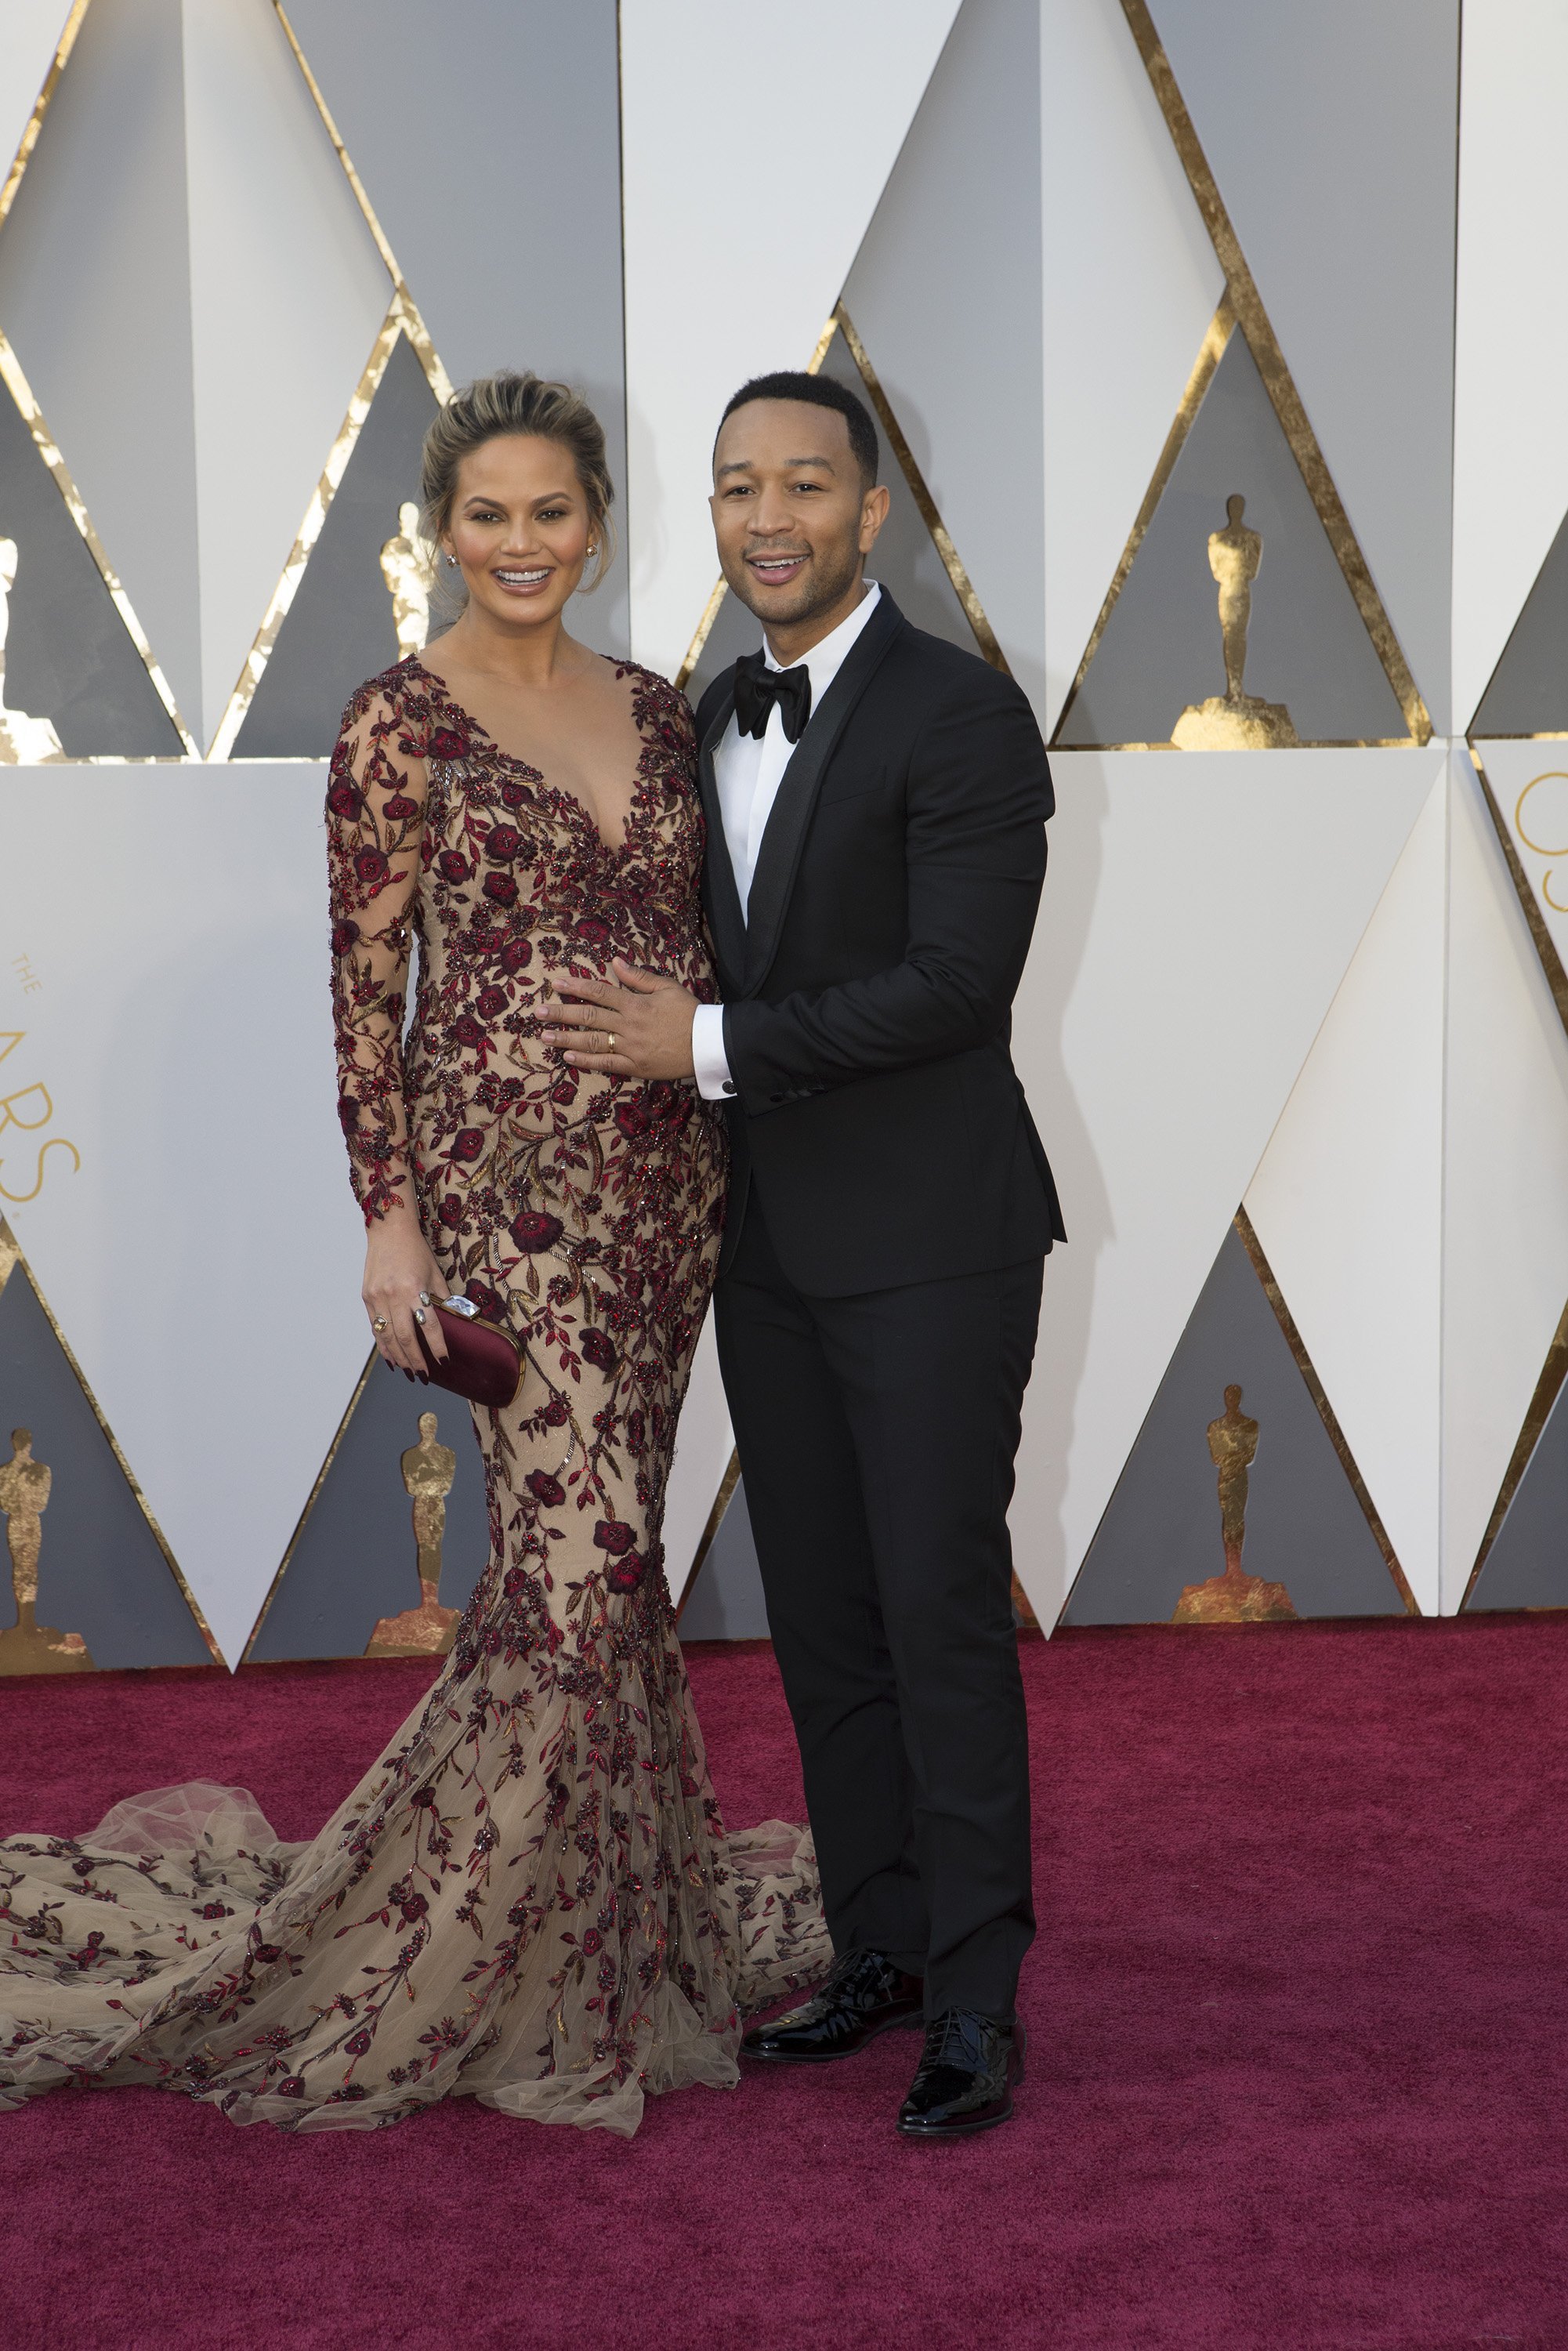 Chrissy Teigen & John Legend arrive at the 88th Academy Awards on Sunday, February 28.